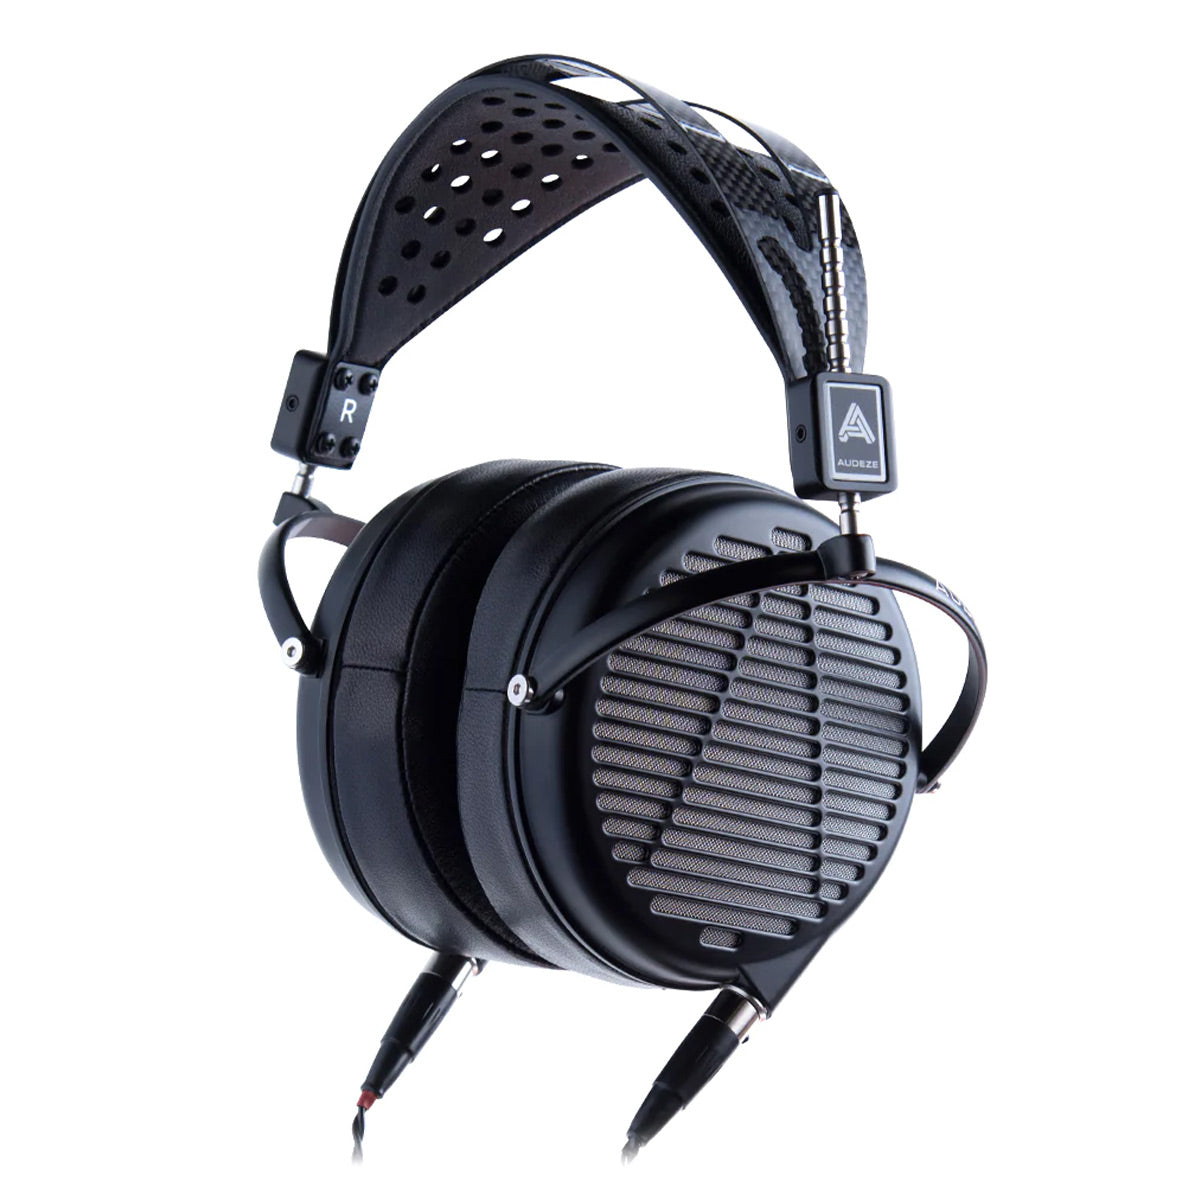 Audeze LCD-MX4 Open-Back Circumaural Headphones with Carrying Case (Black)